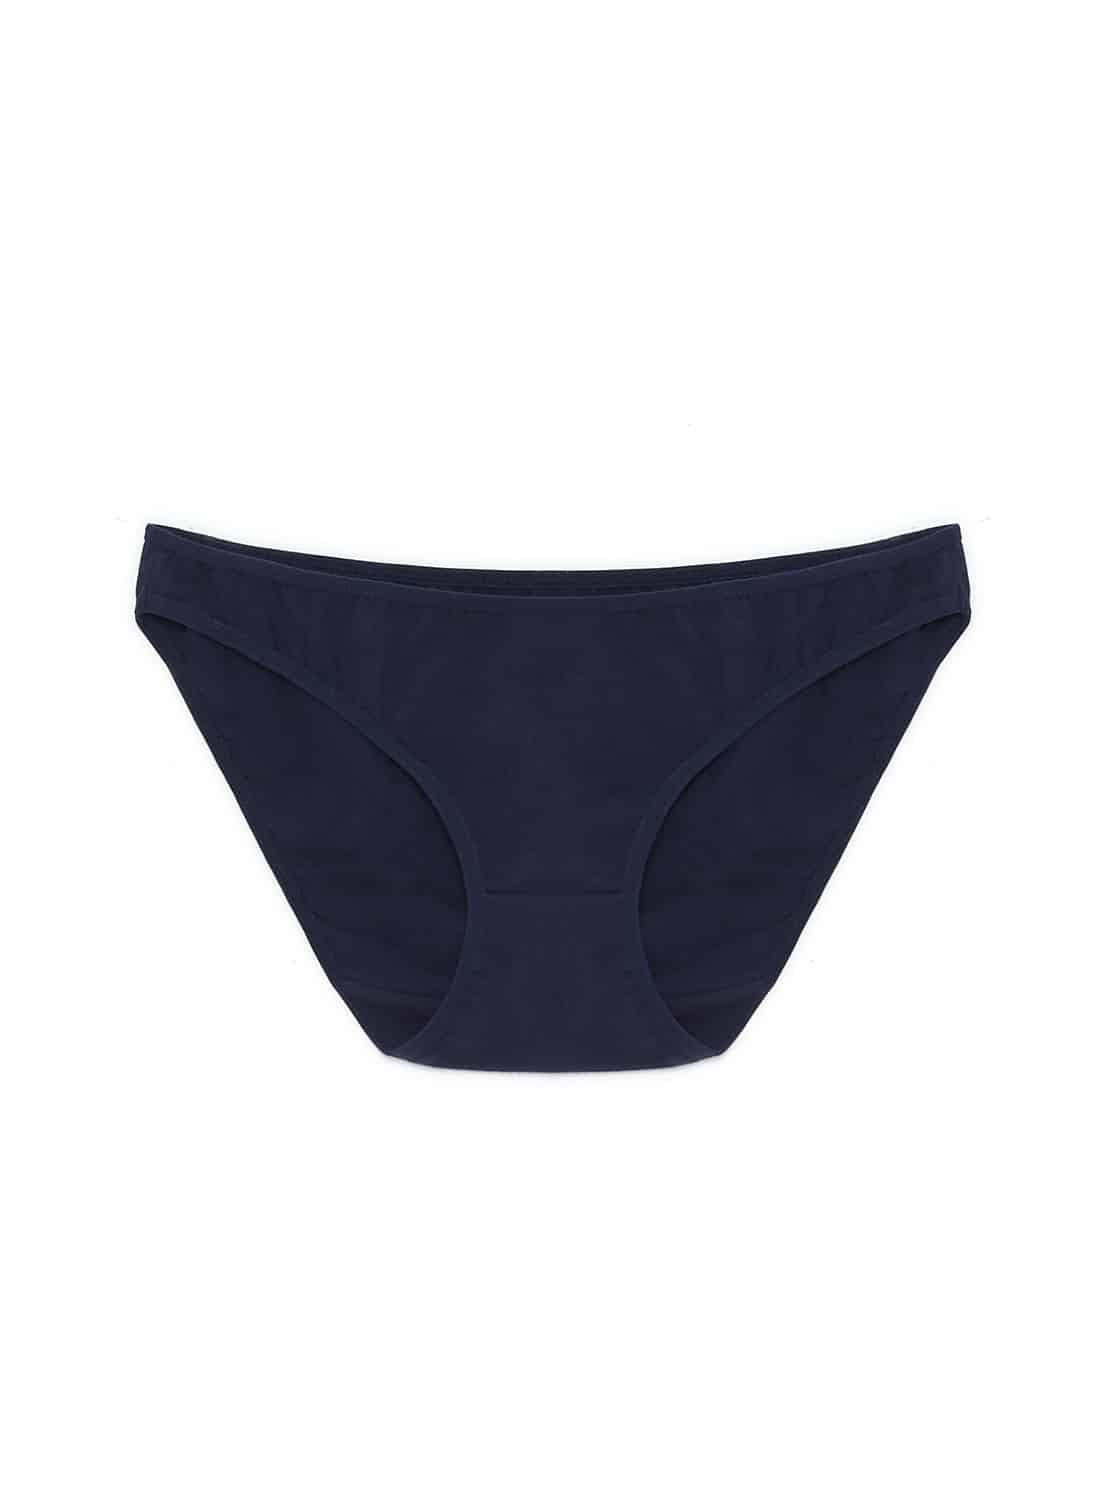 Eve Chantelle Multi Color Underwear - Bikini Cut - Pack Of 7 Panties For Women - chantelleve